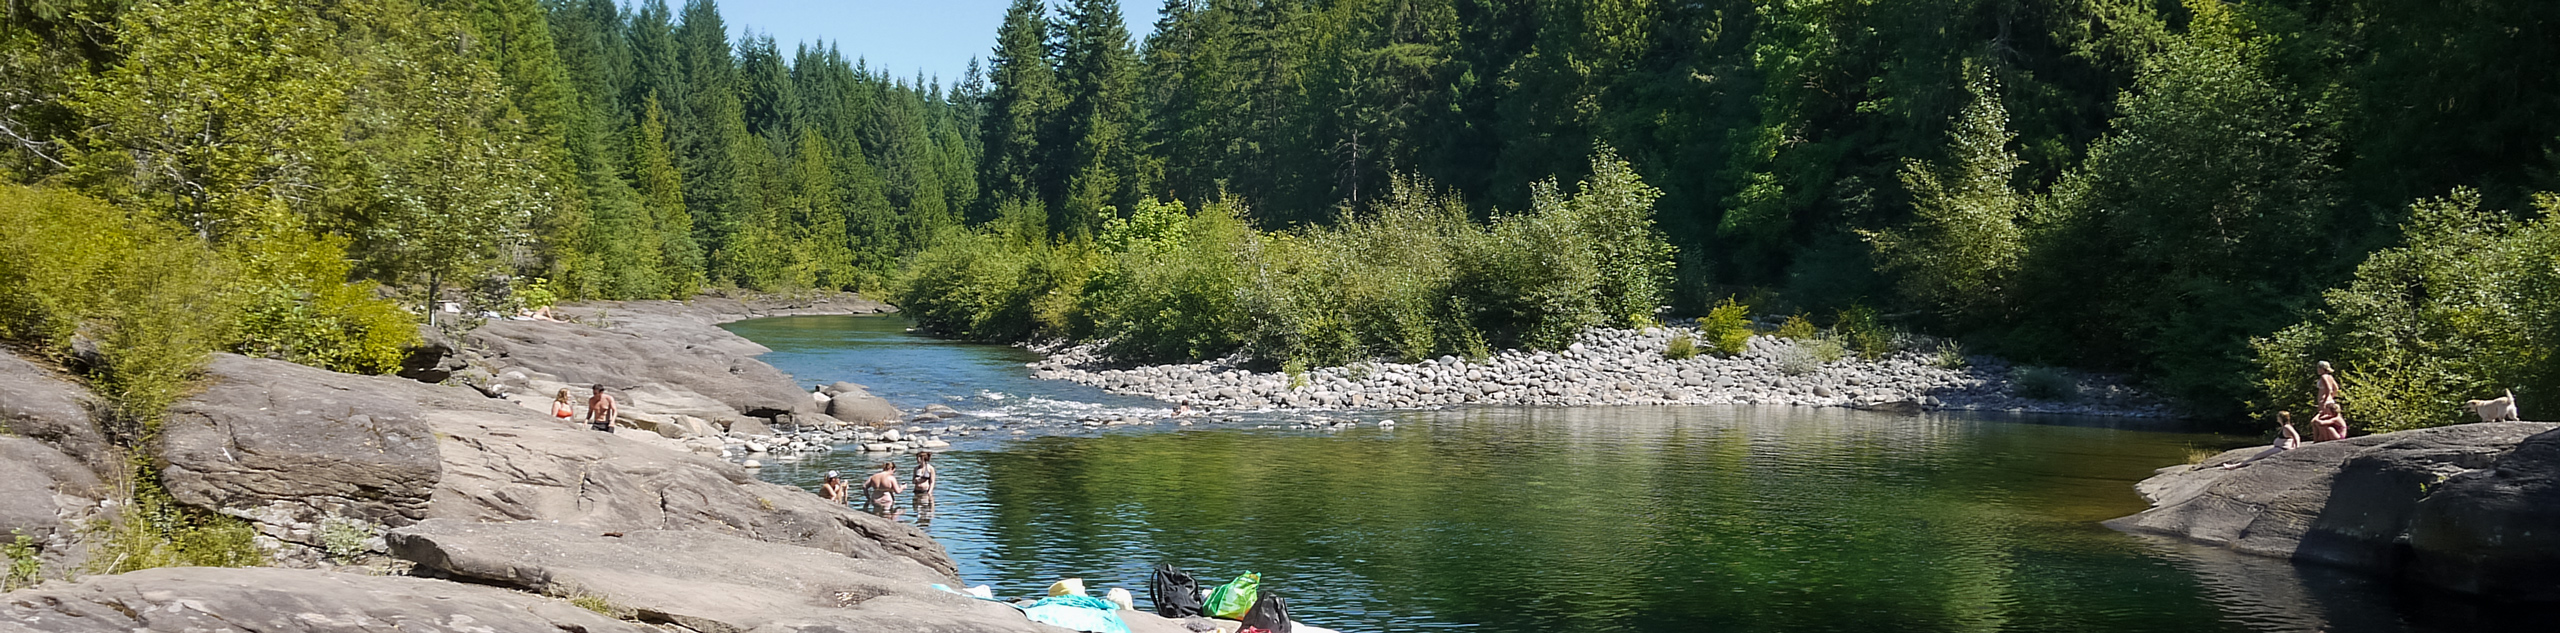 Nanaimo River Trail